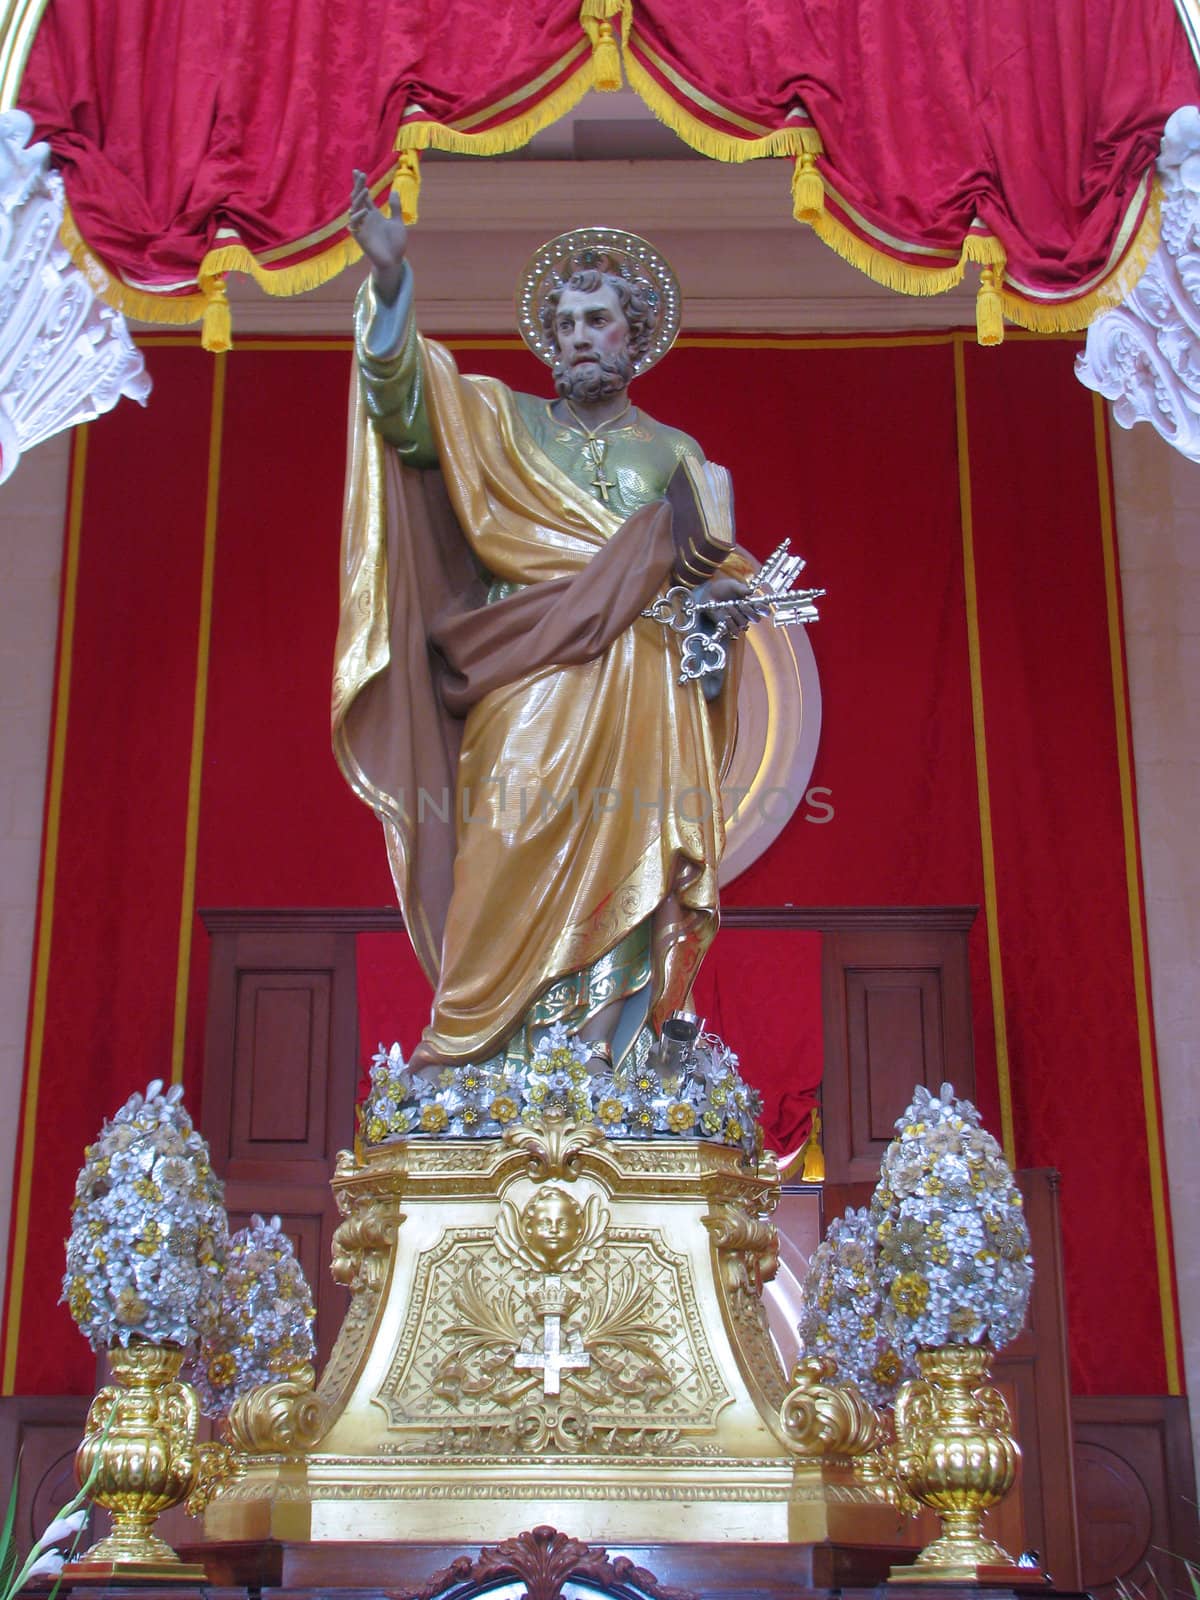 The statue of Saint Peter in Birzebbugia, Malta.